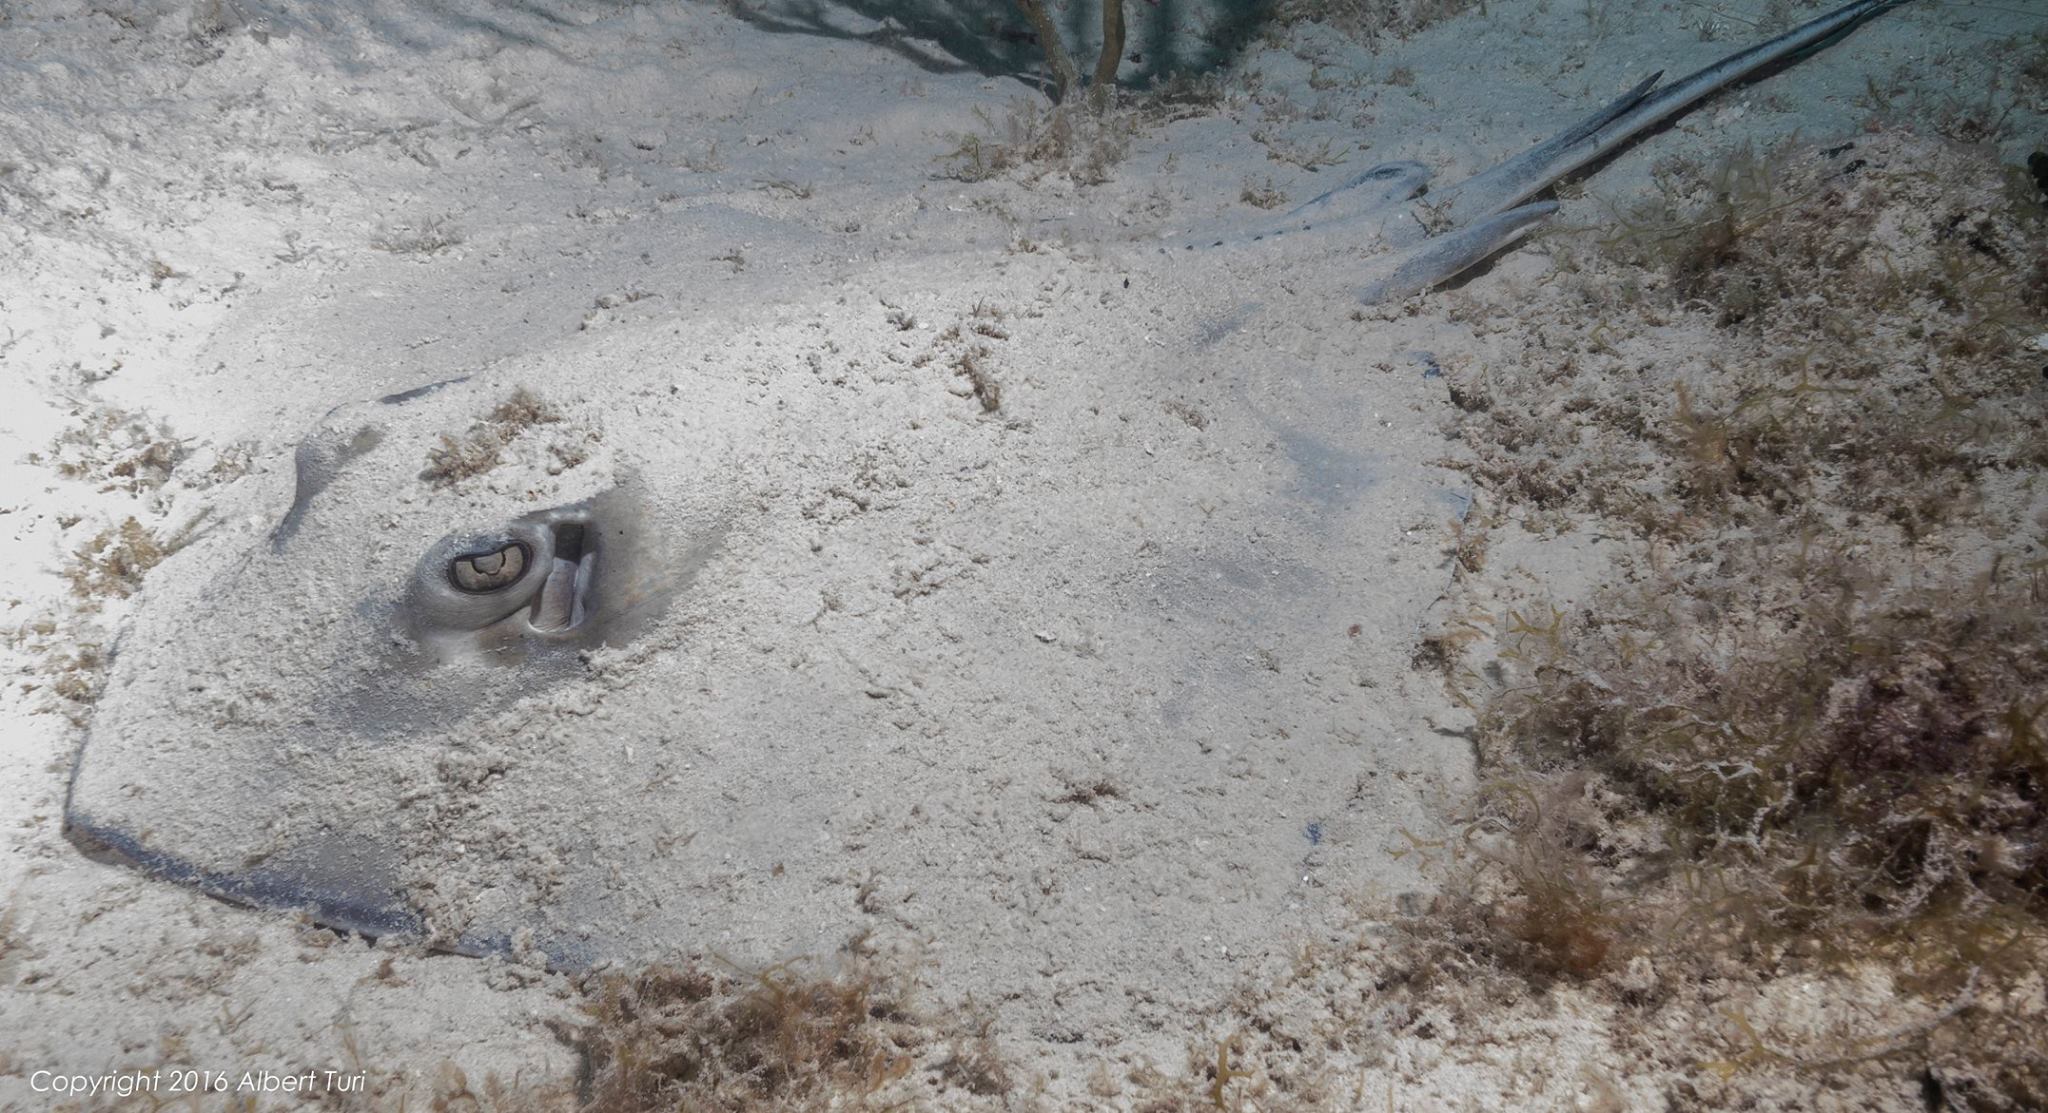 Stingray hiding in the sand